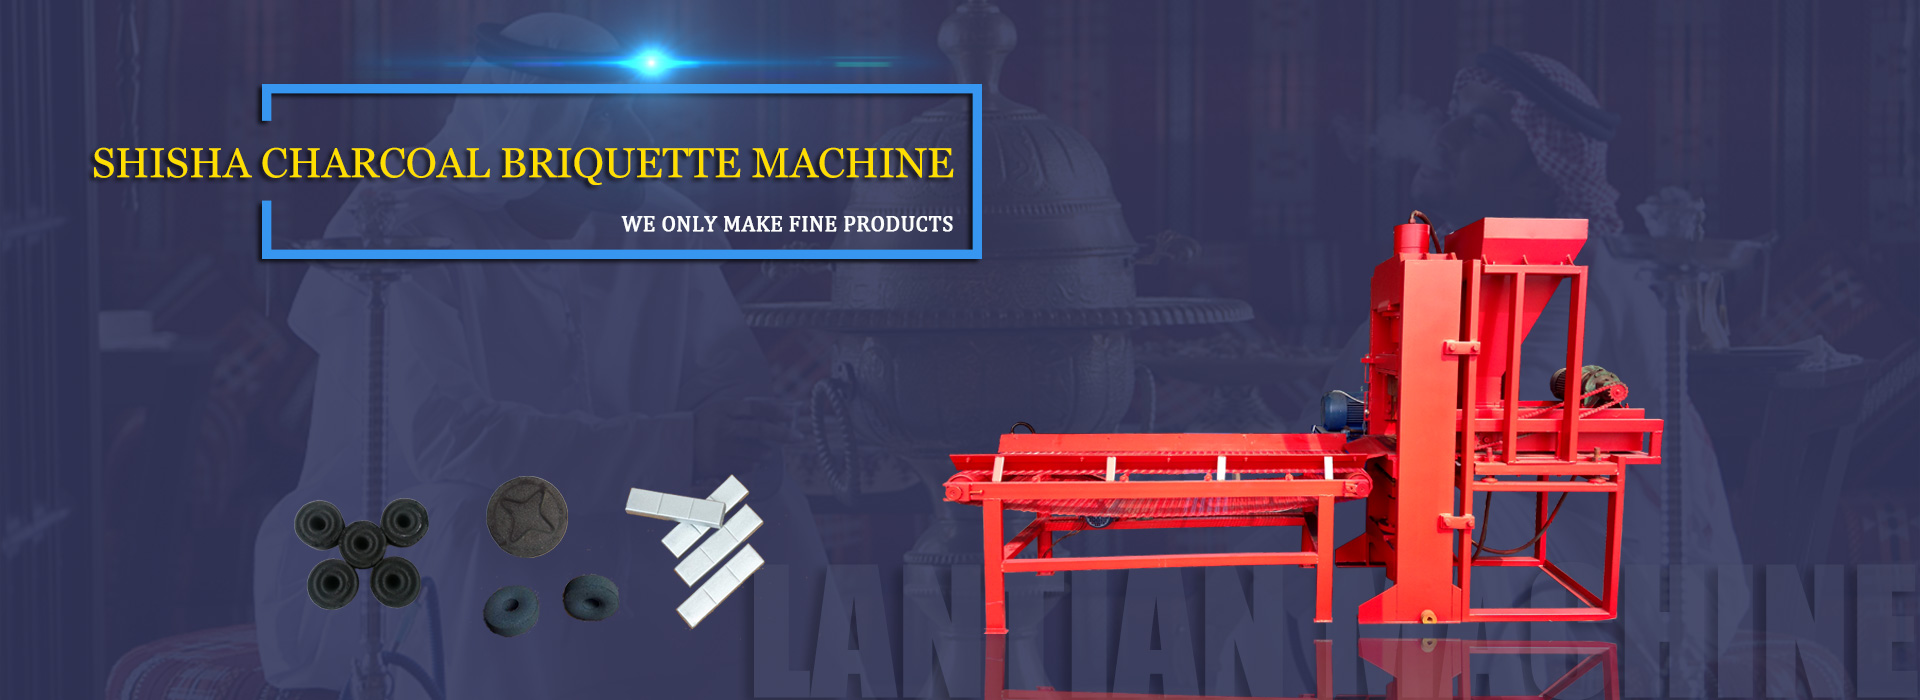 Lantian Machinery